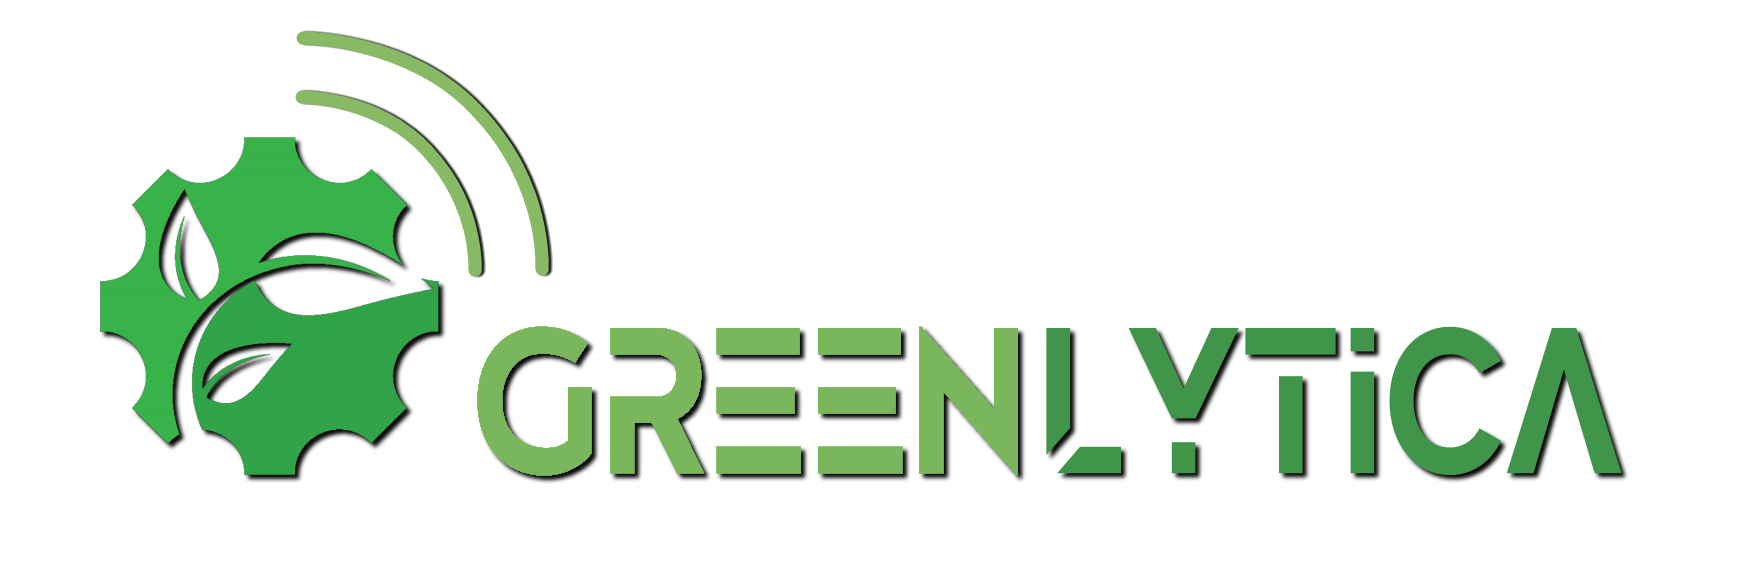 GreenLytica Web Design